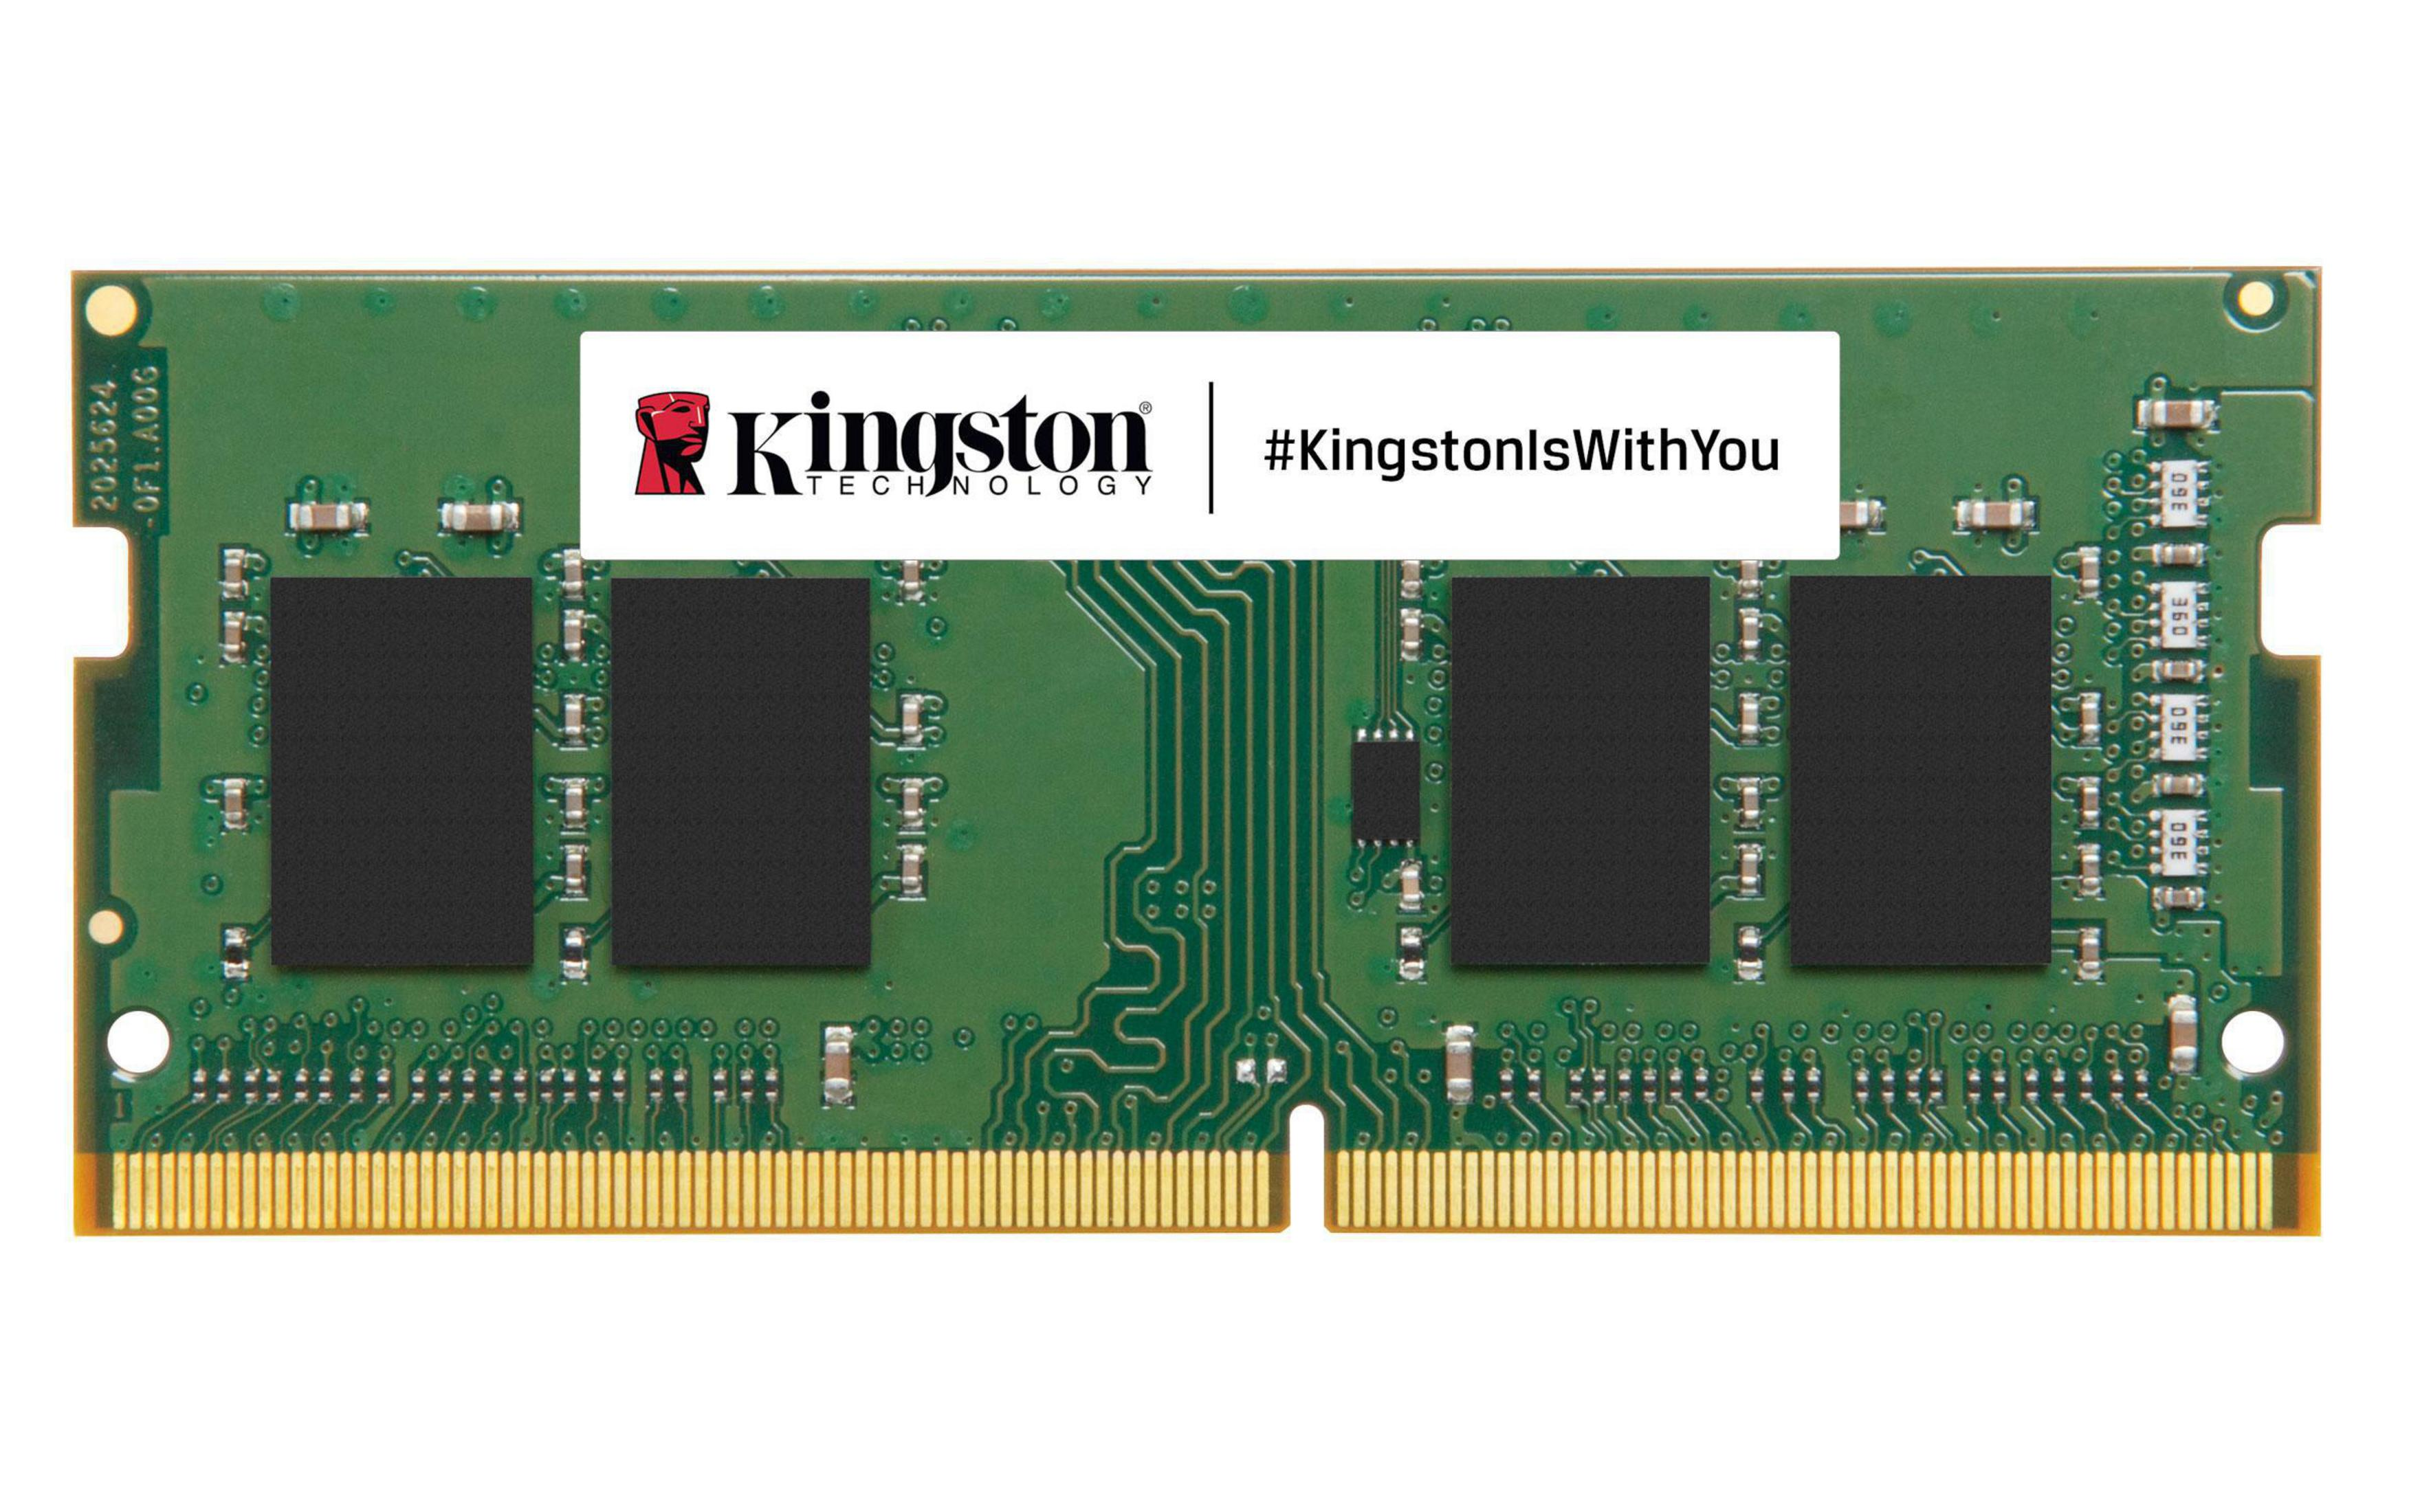 KVR32S22S6/4 DDR4 KINGSTON GB Arbeitsspeicher 4